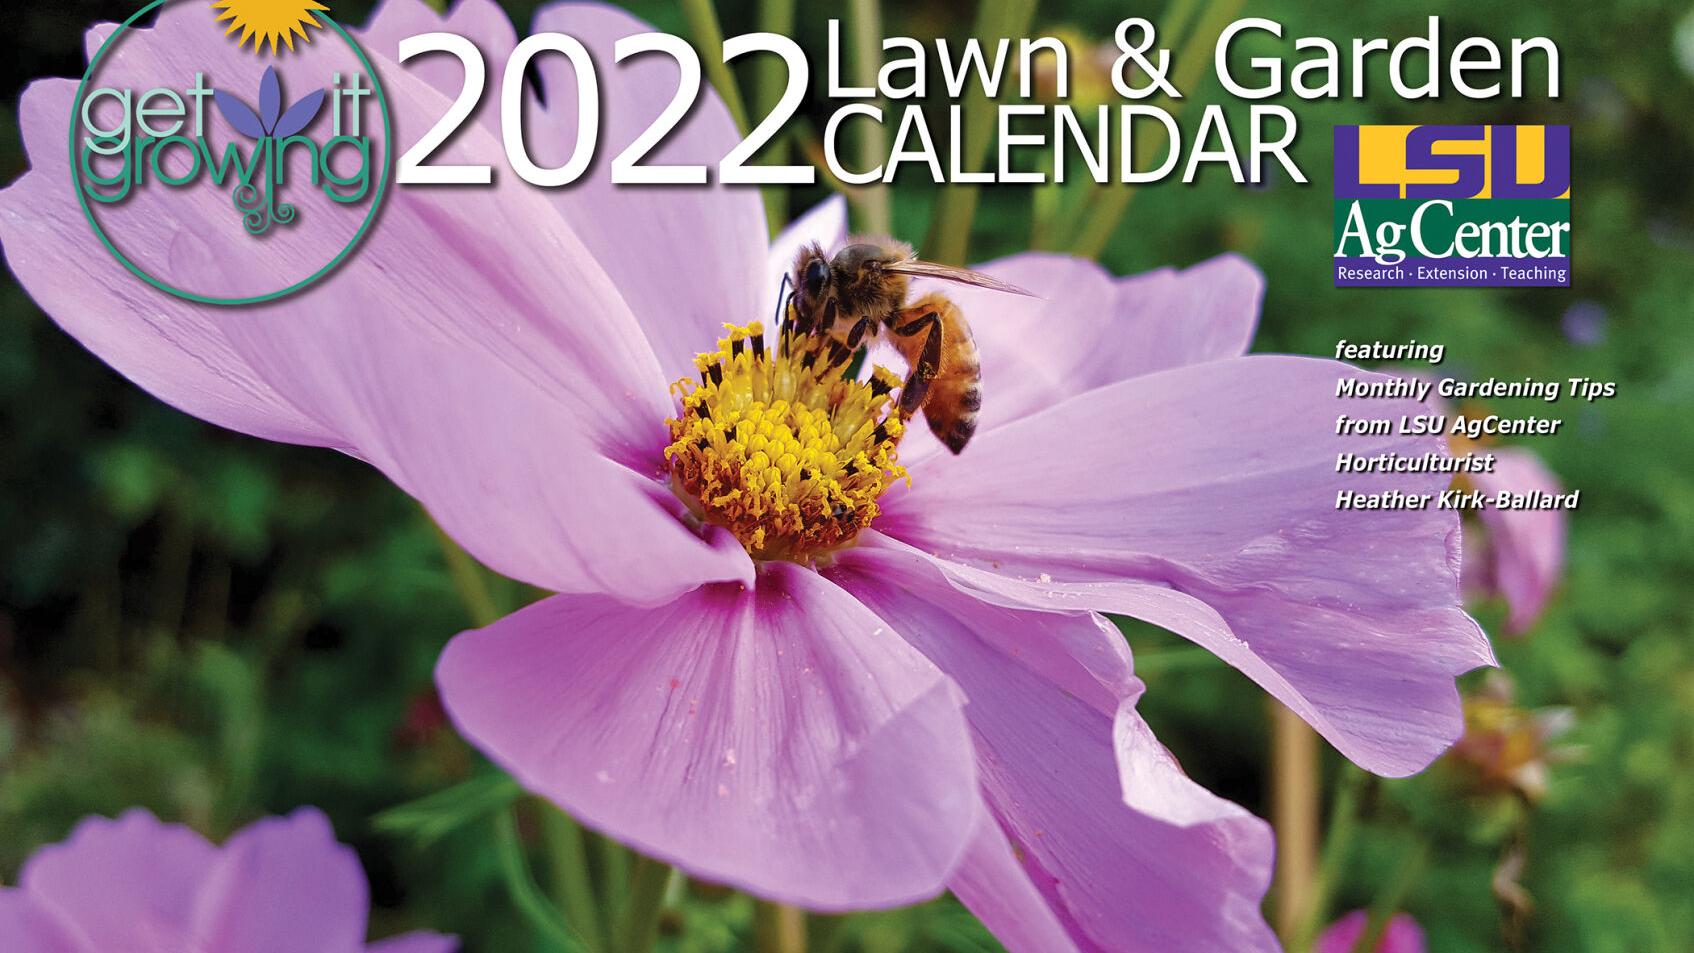 Lsu Calendar 2022 Get It Growing With Lsu Agcenter's Calendar For 2022 | Home/Garden |  Theadvocate.com